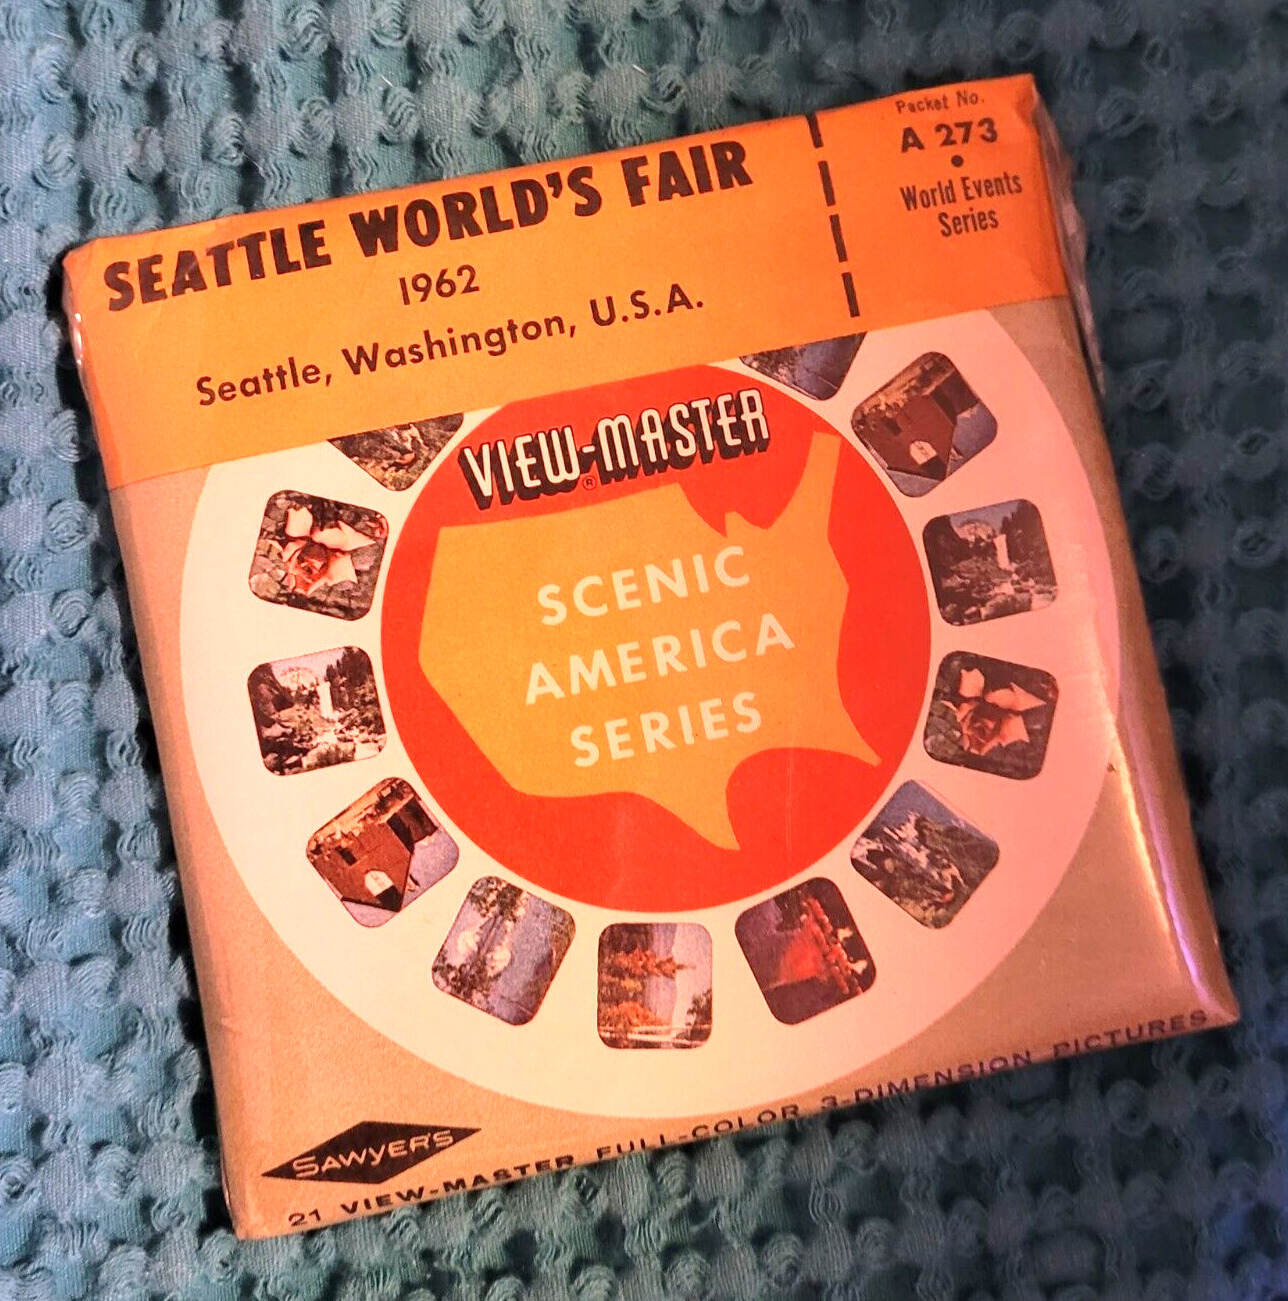 Rare SEALED A273 Seattle World's Fair 1962 Washington view-master 3 Reels Packet